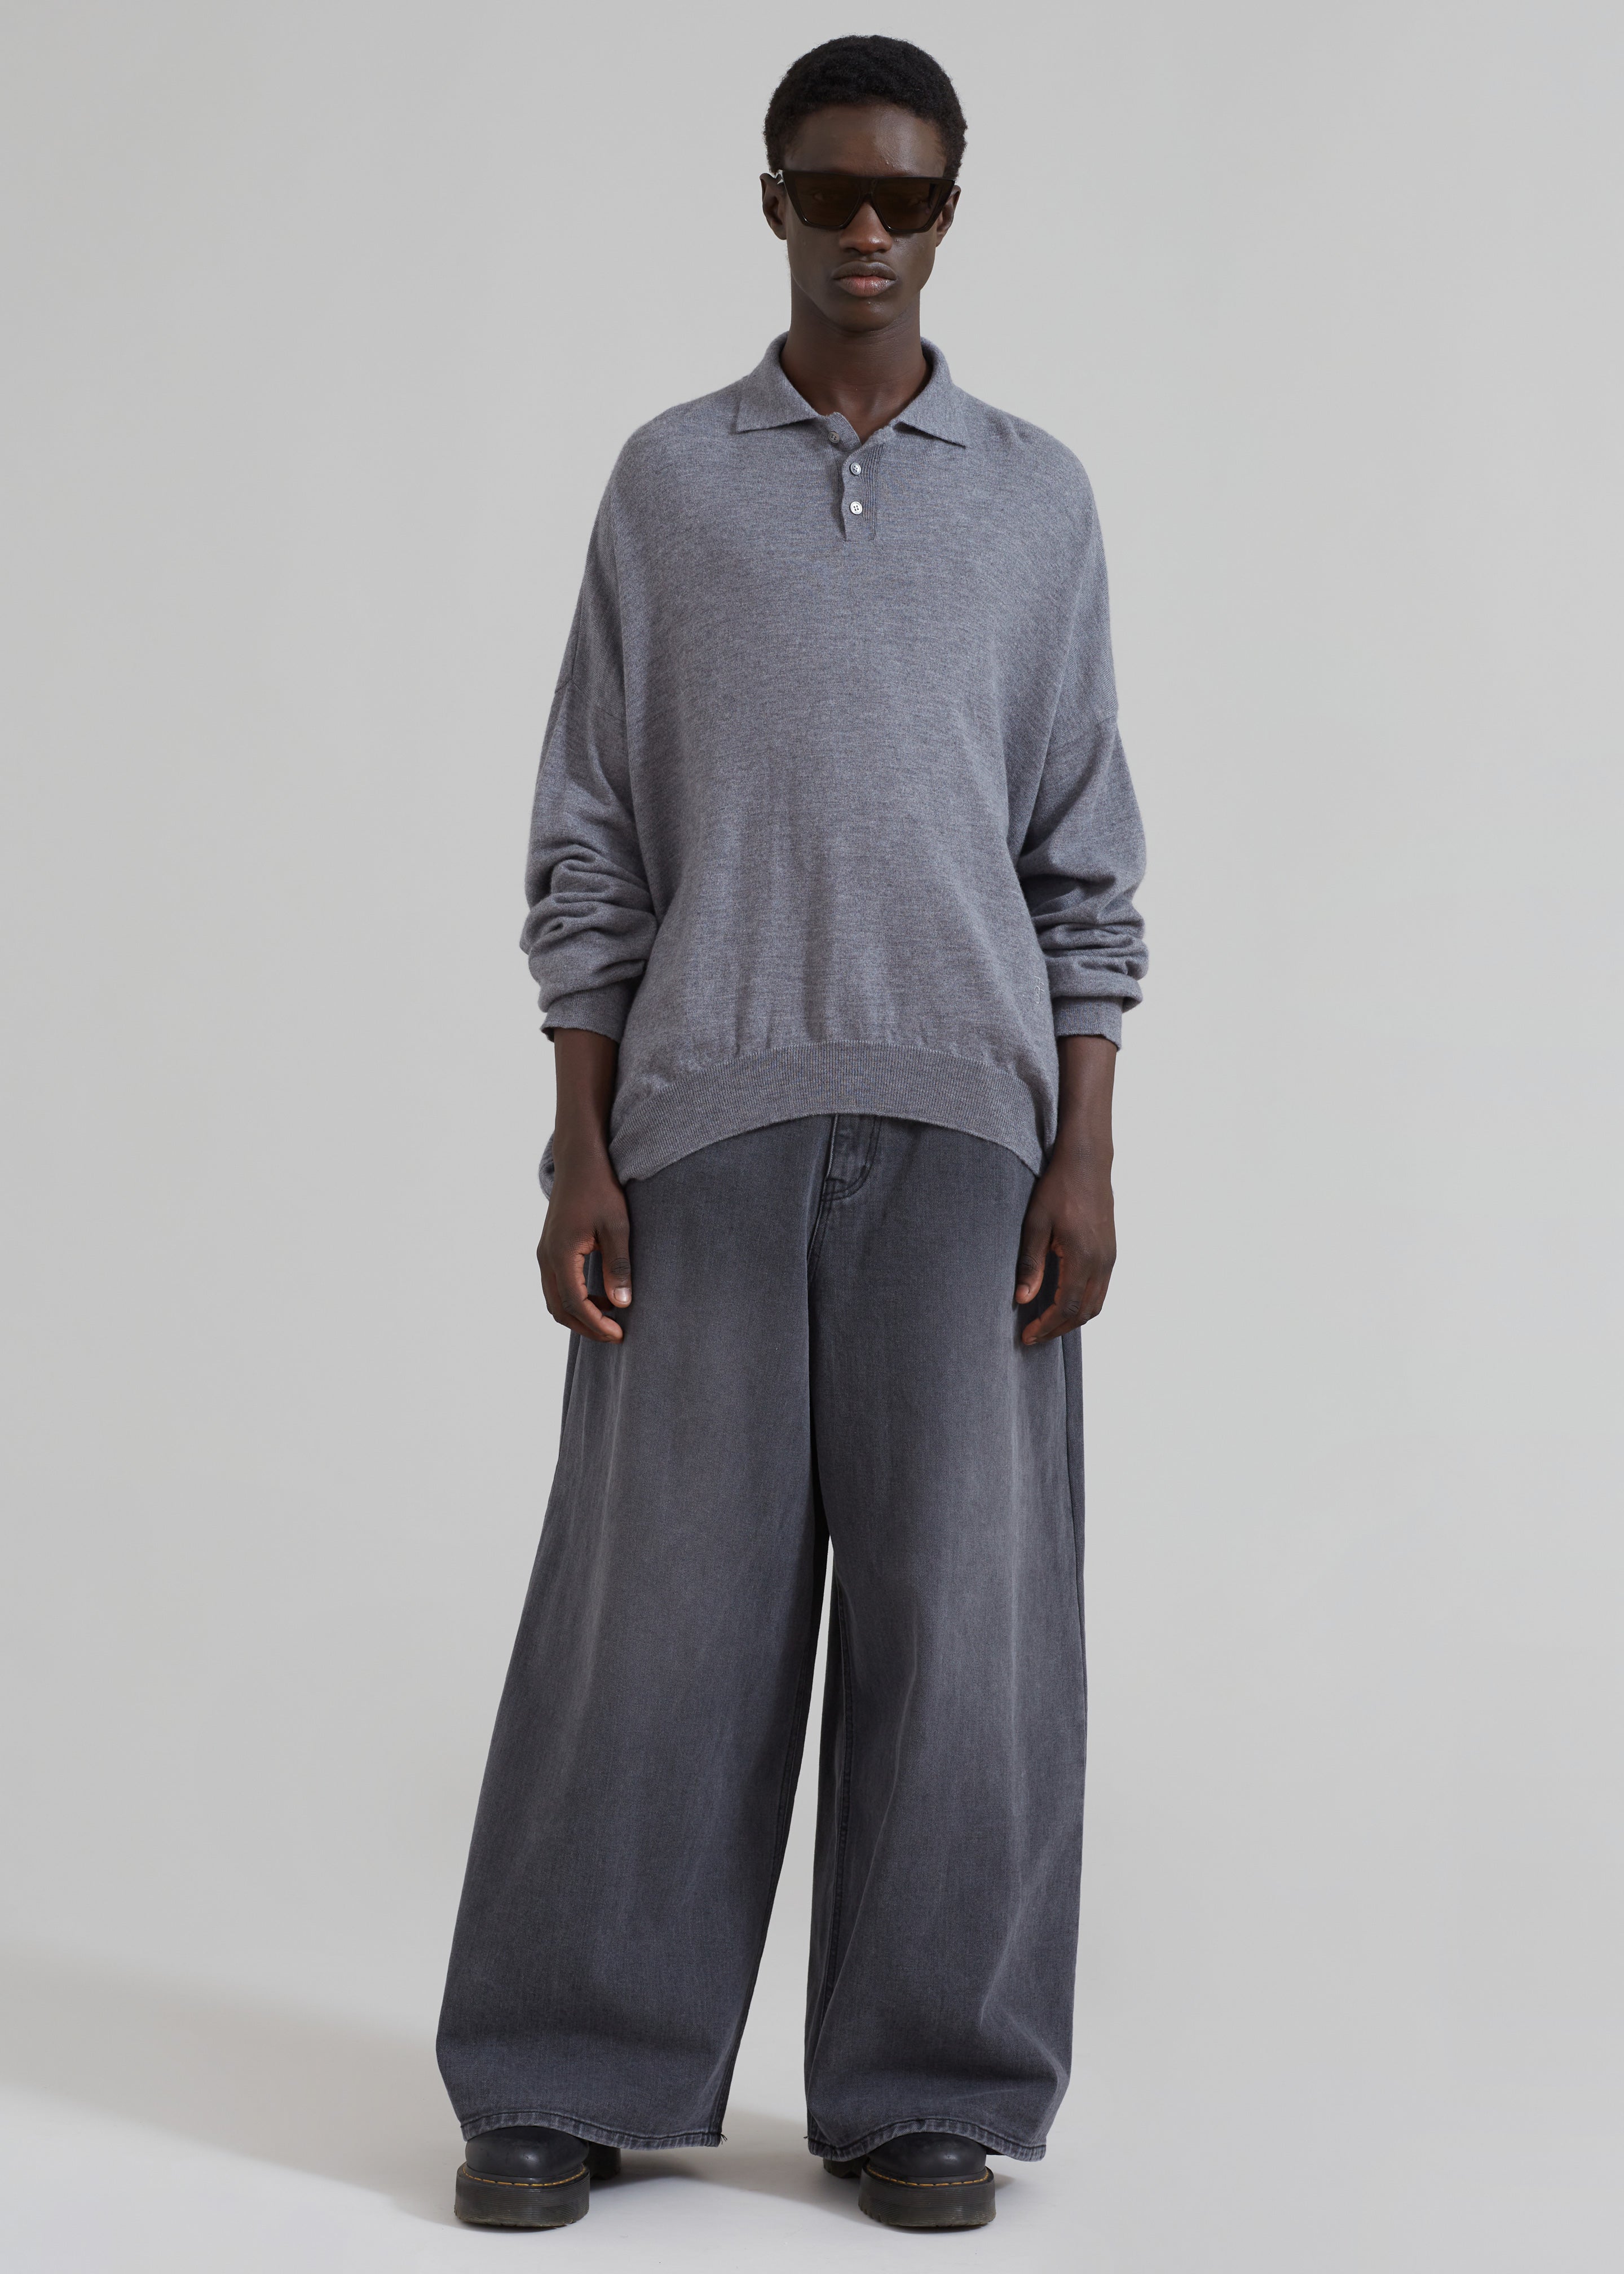 Meriel Polo Sweater - Grey - 8 - Meriel Polo Sweater - Grey [gender-male]